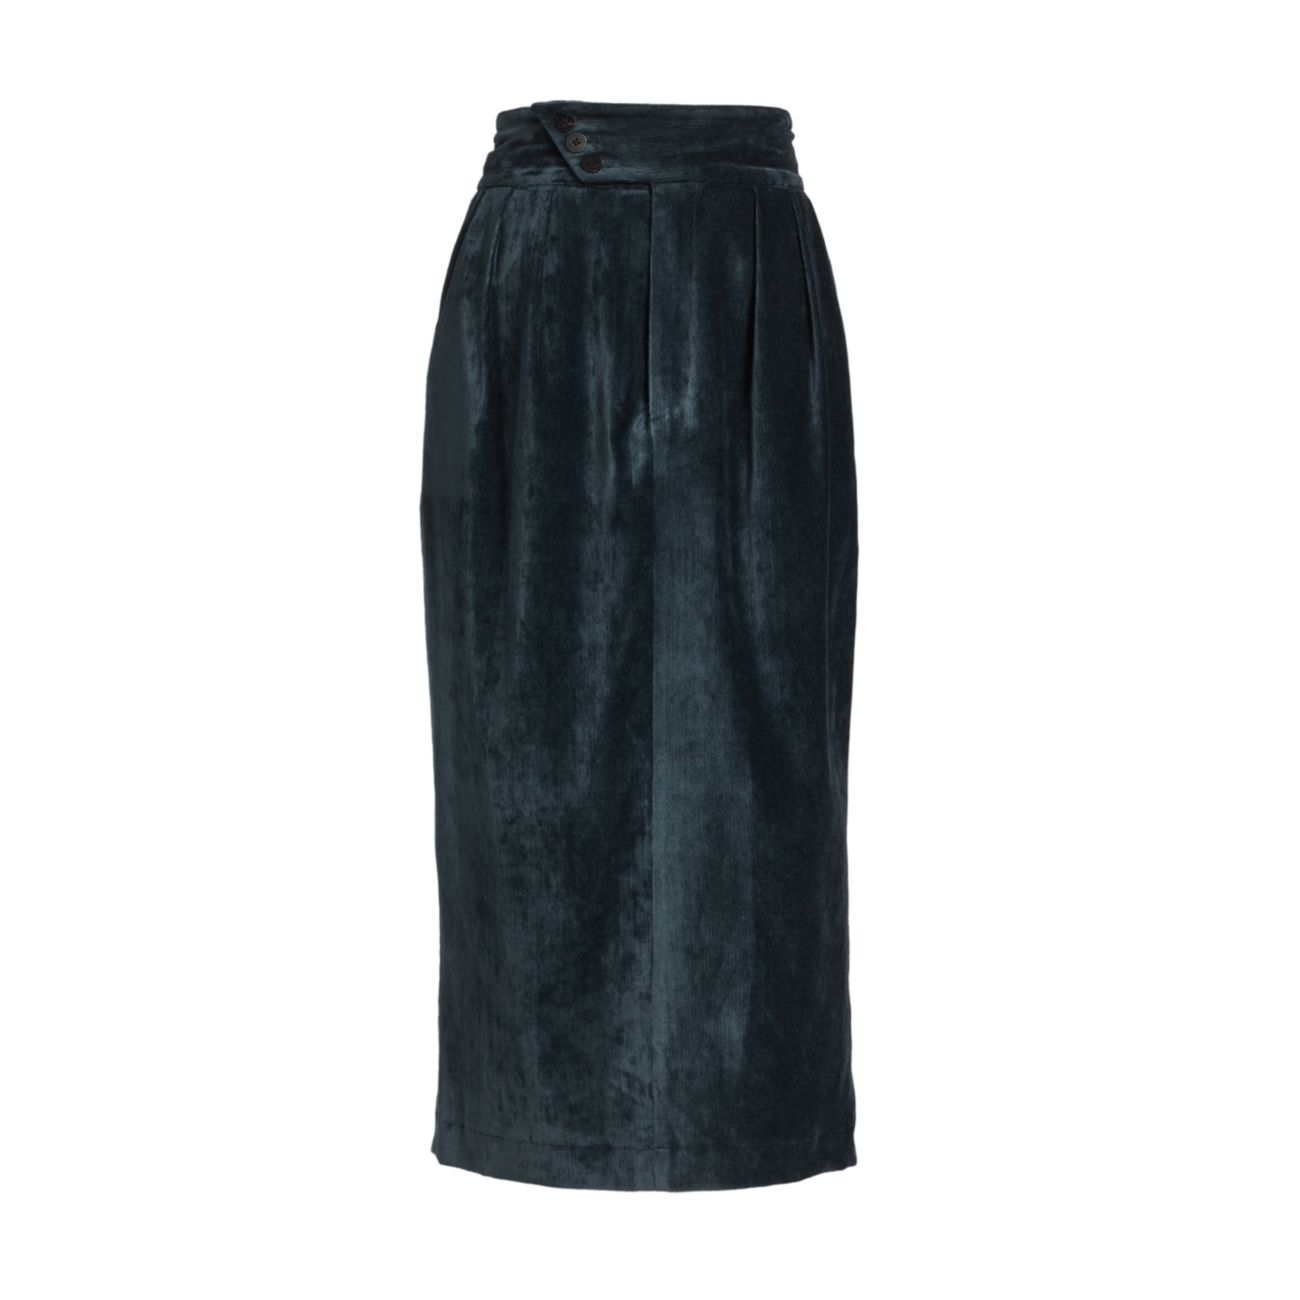 Вельветовая юбка-миди Polly со складками Black Iris